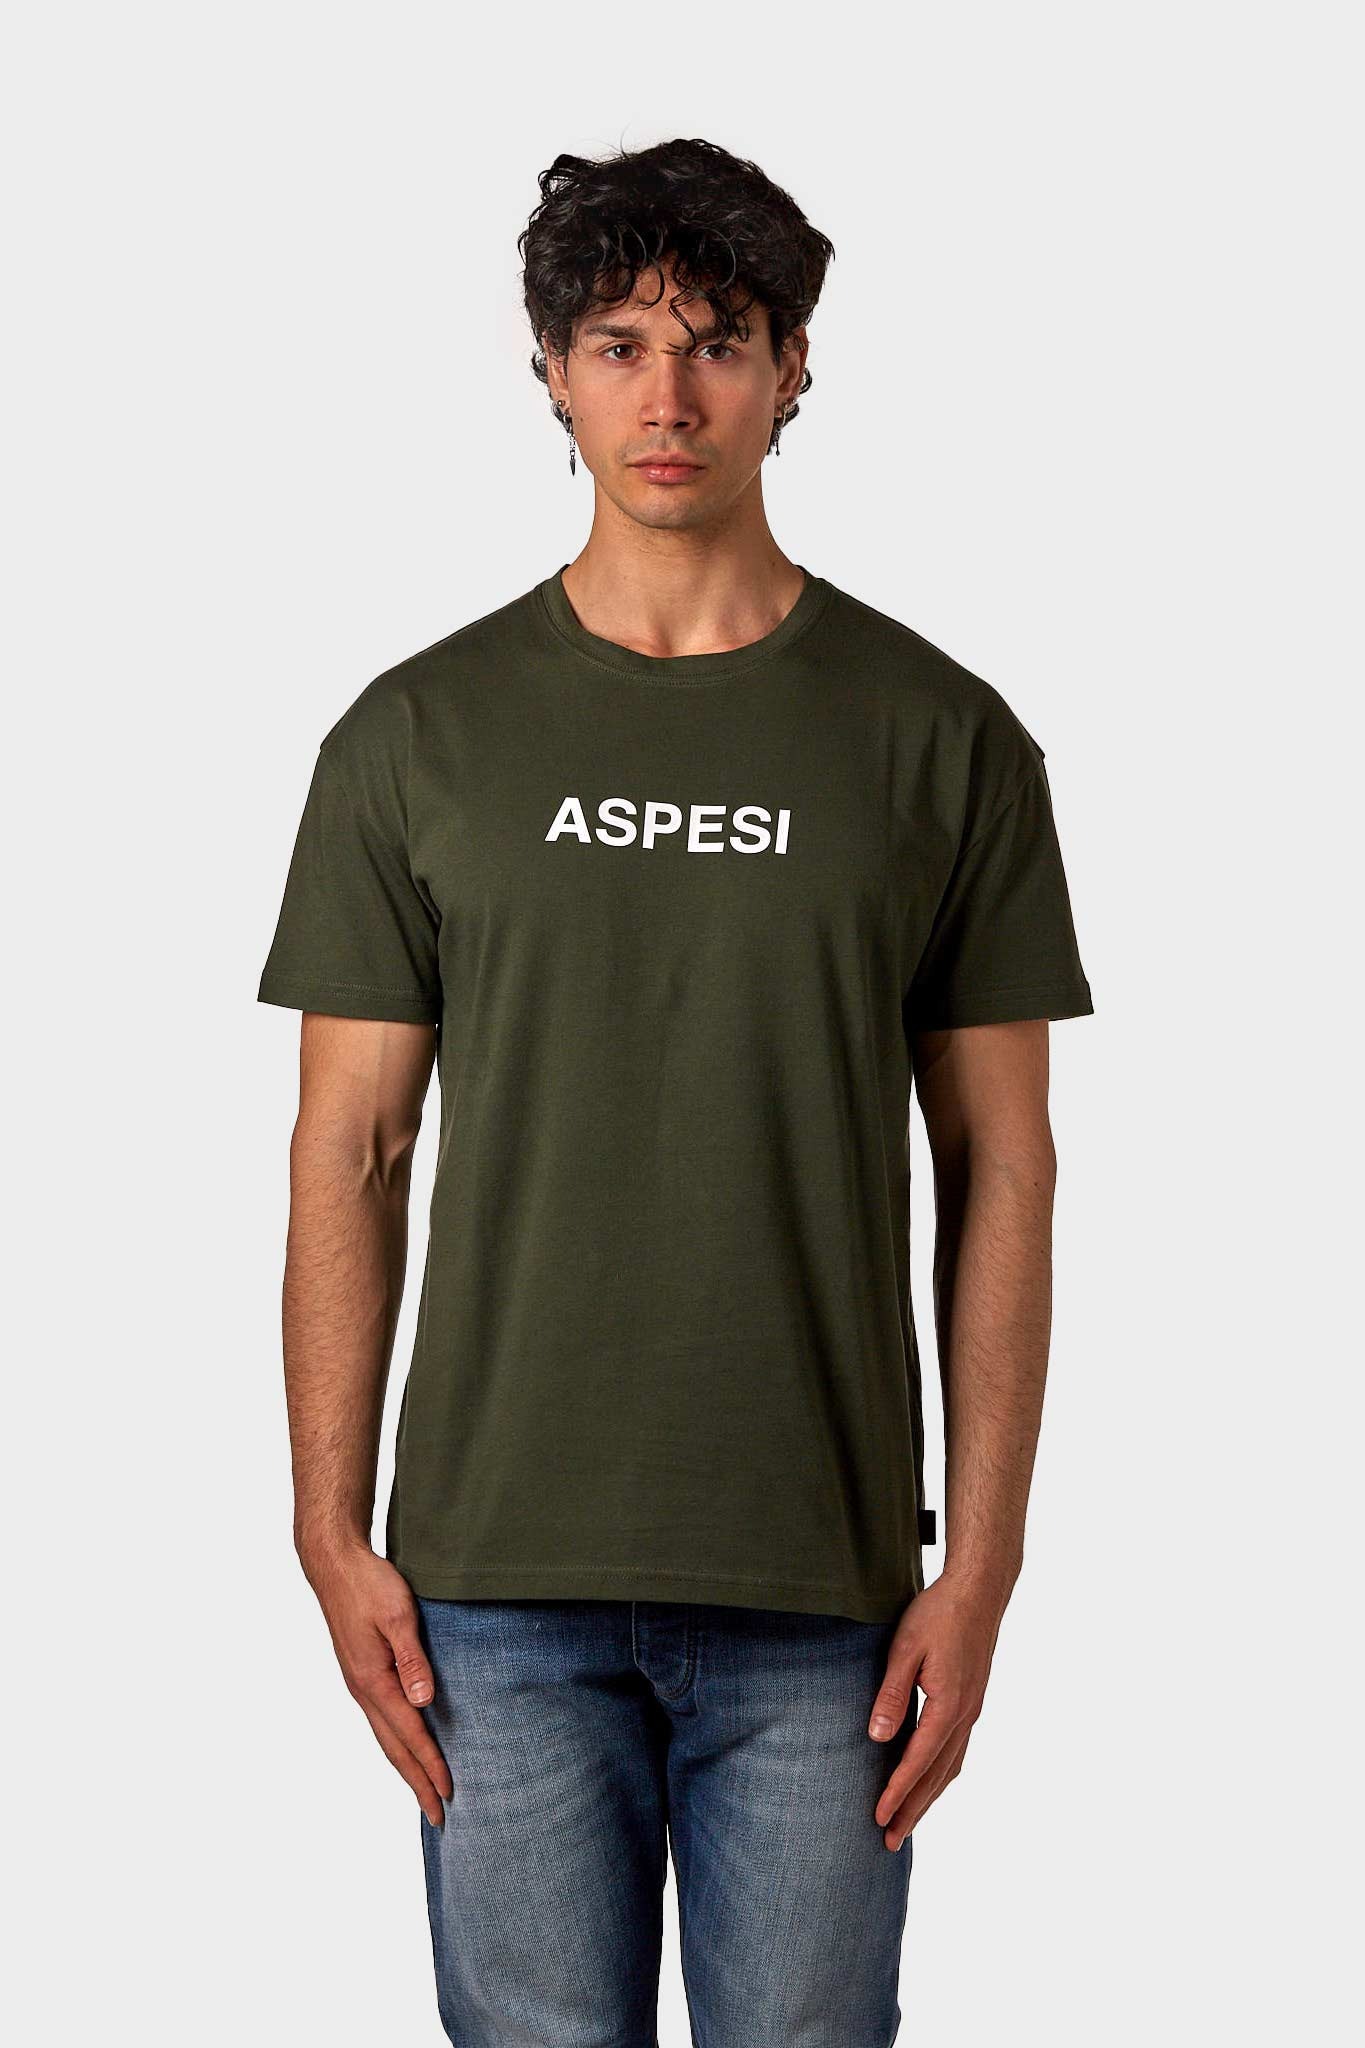 ASPESI T-SHIRT ASP1MTS02 VERDE MILITARE UOMO